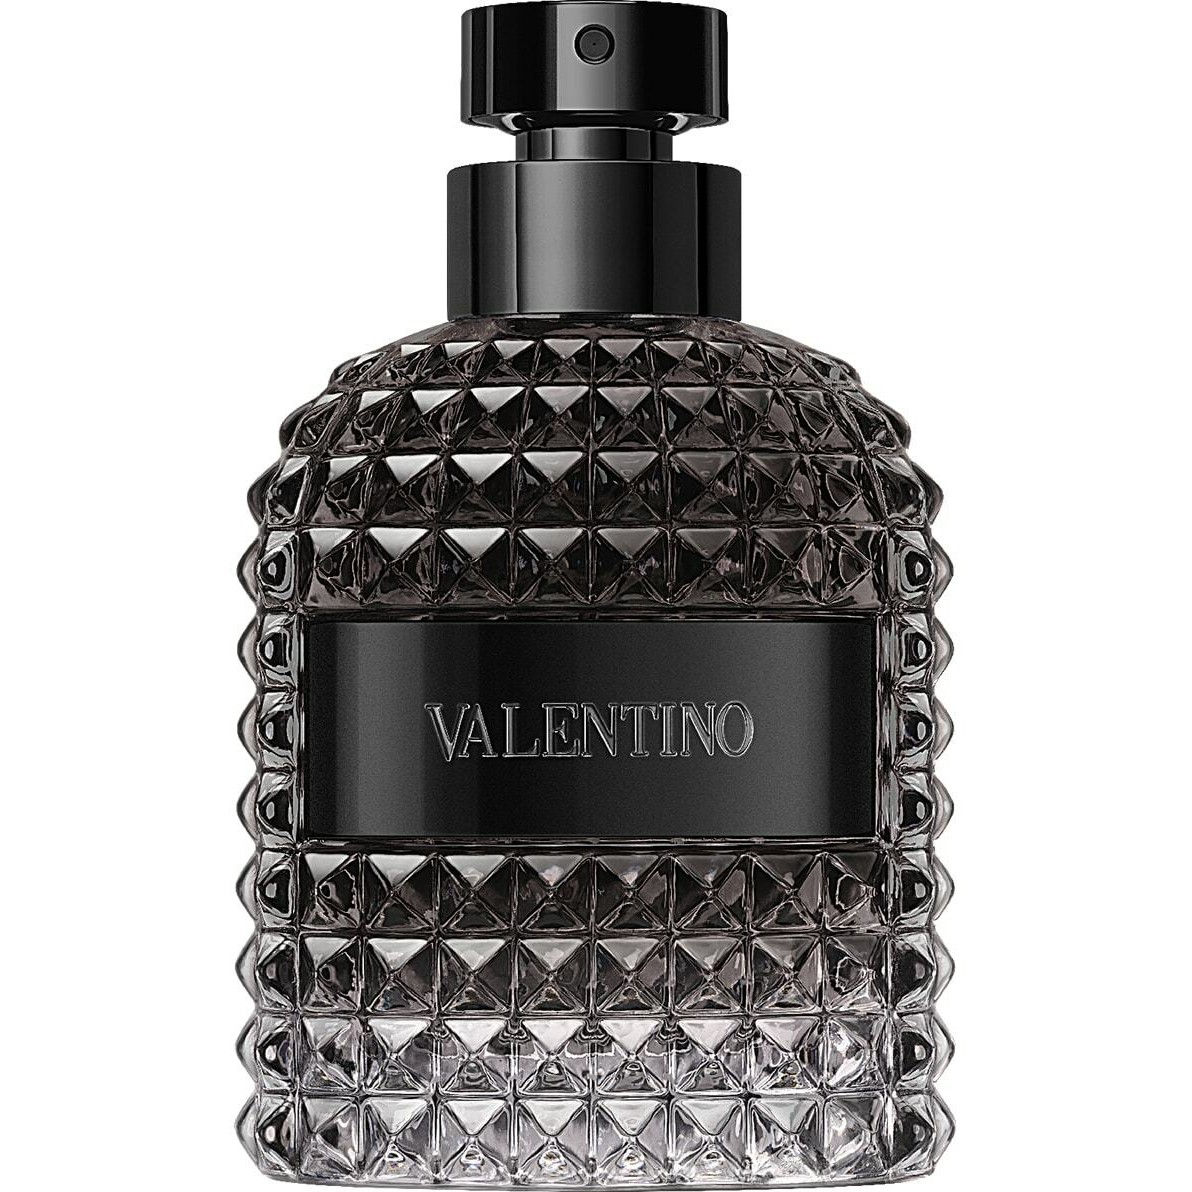 Valentino Uomo Eau de parfum spray intense 100 ml